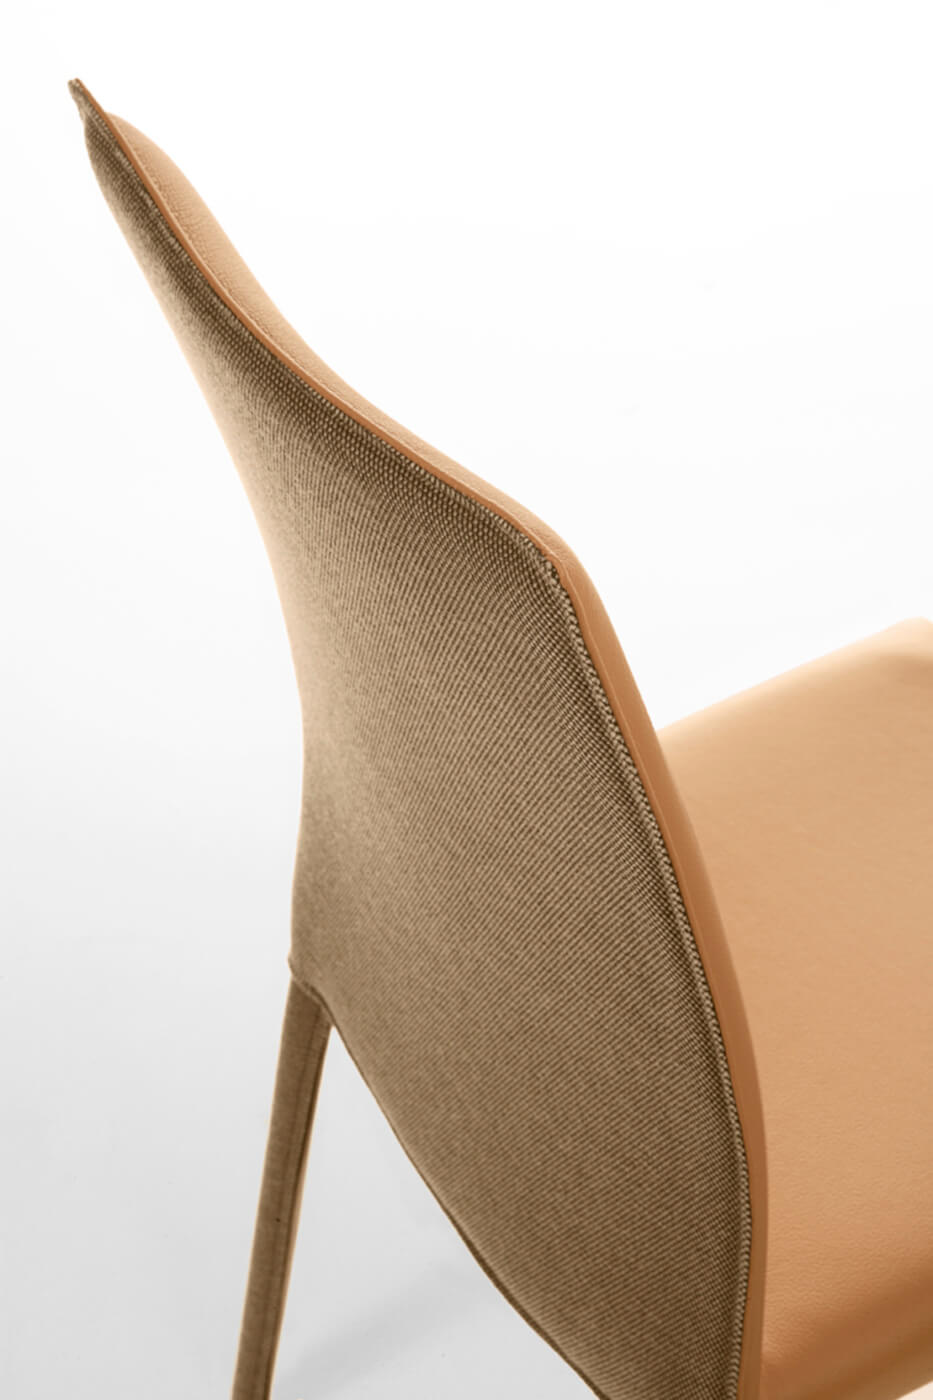 Nuvola stool backrest detail in orange fabric